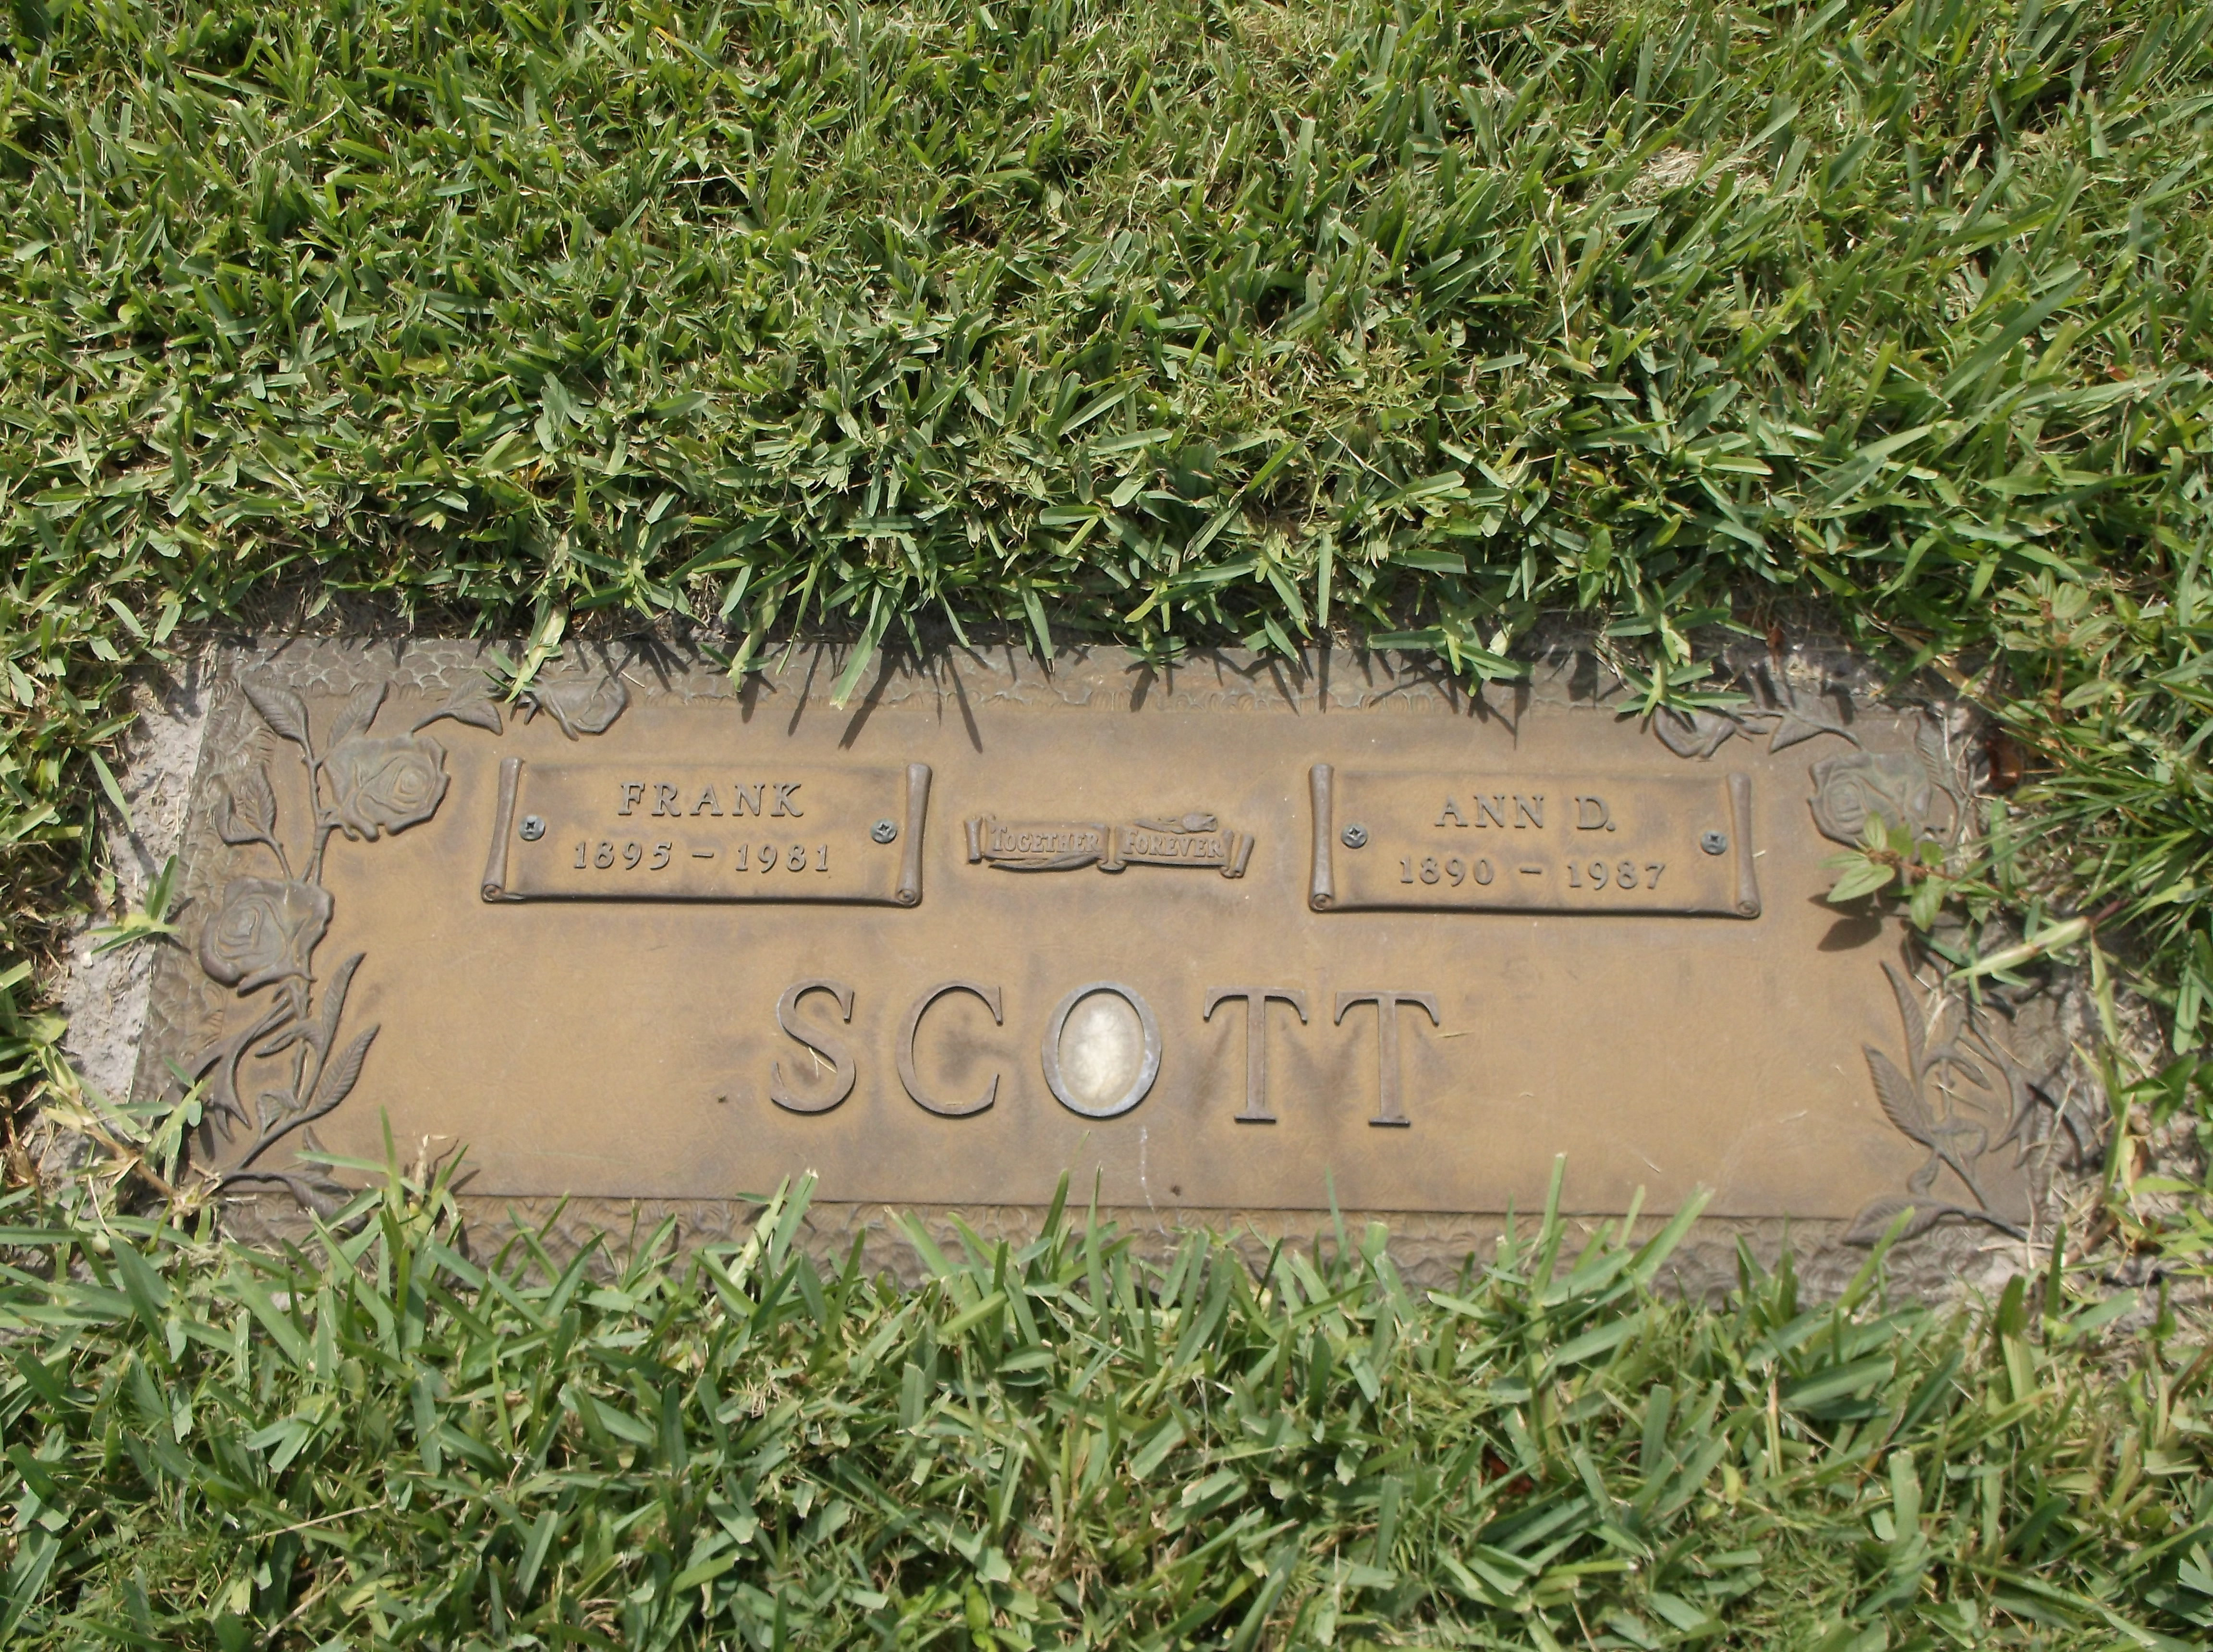 Frank Scott